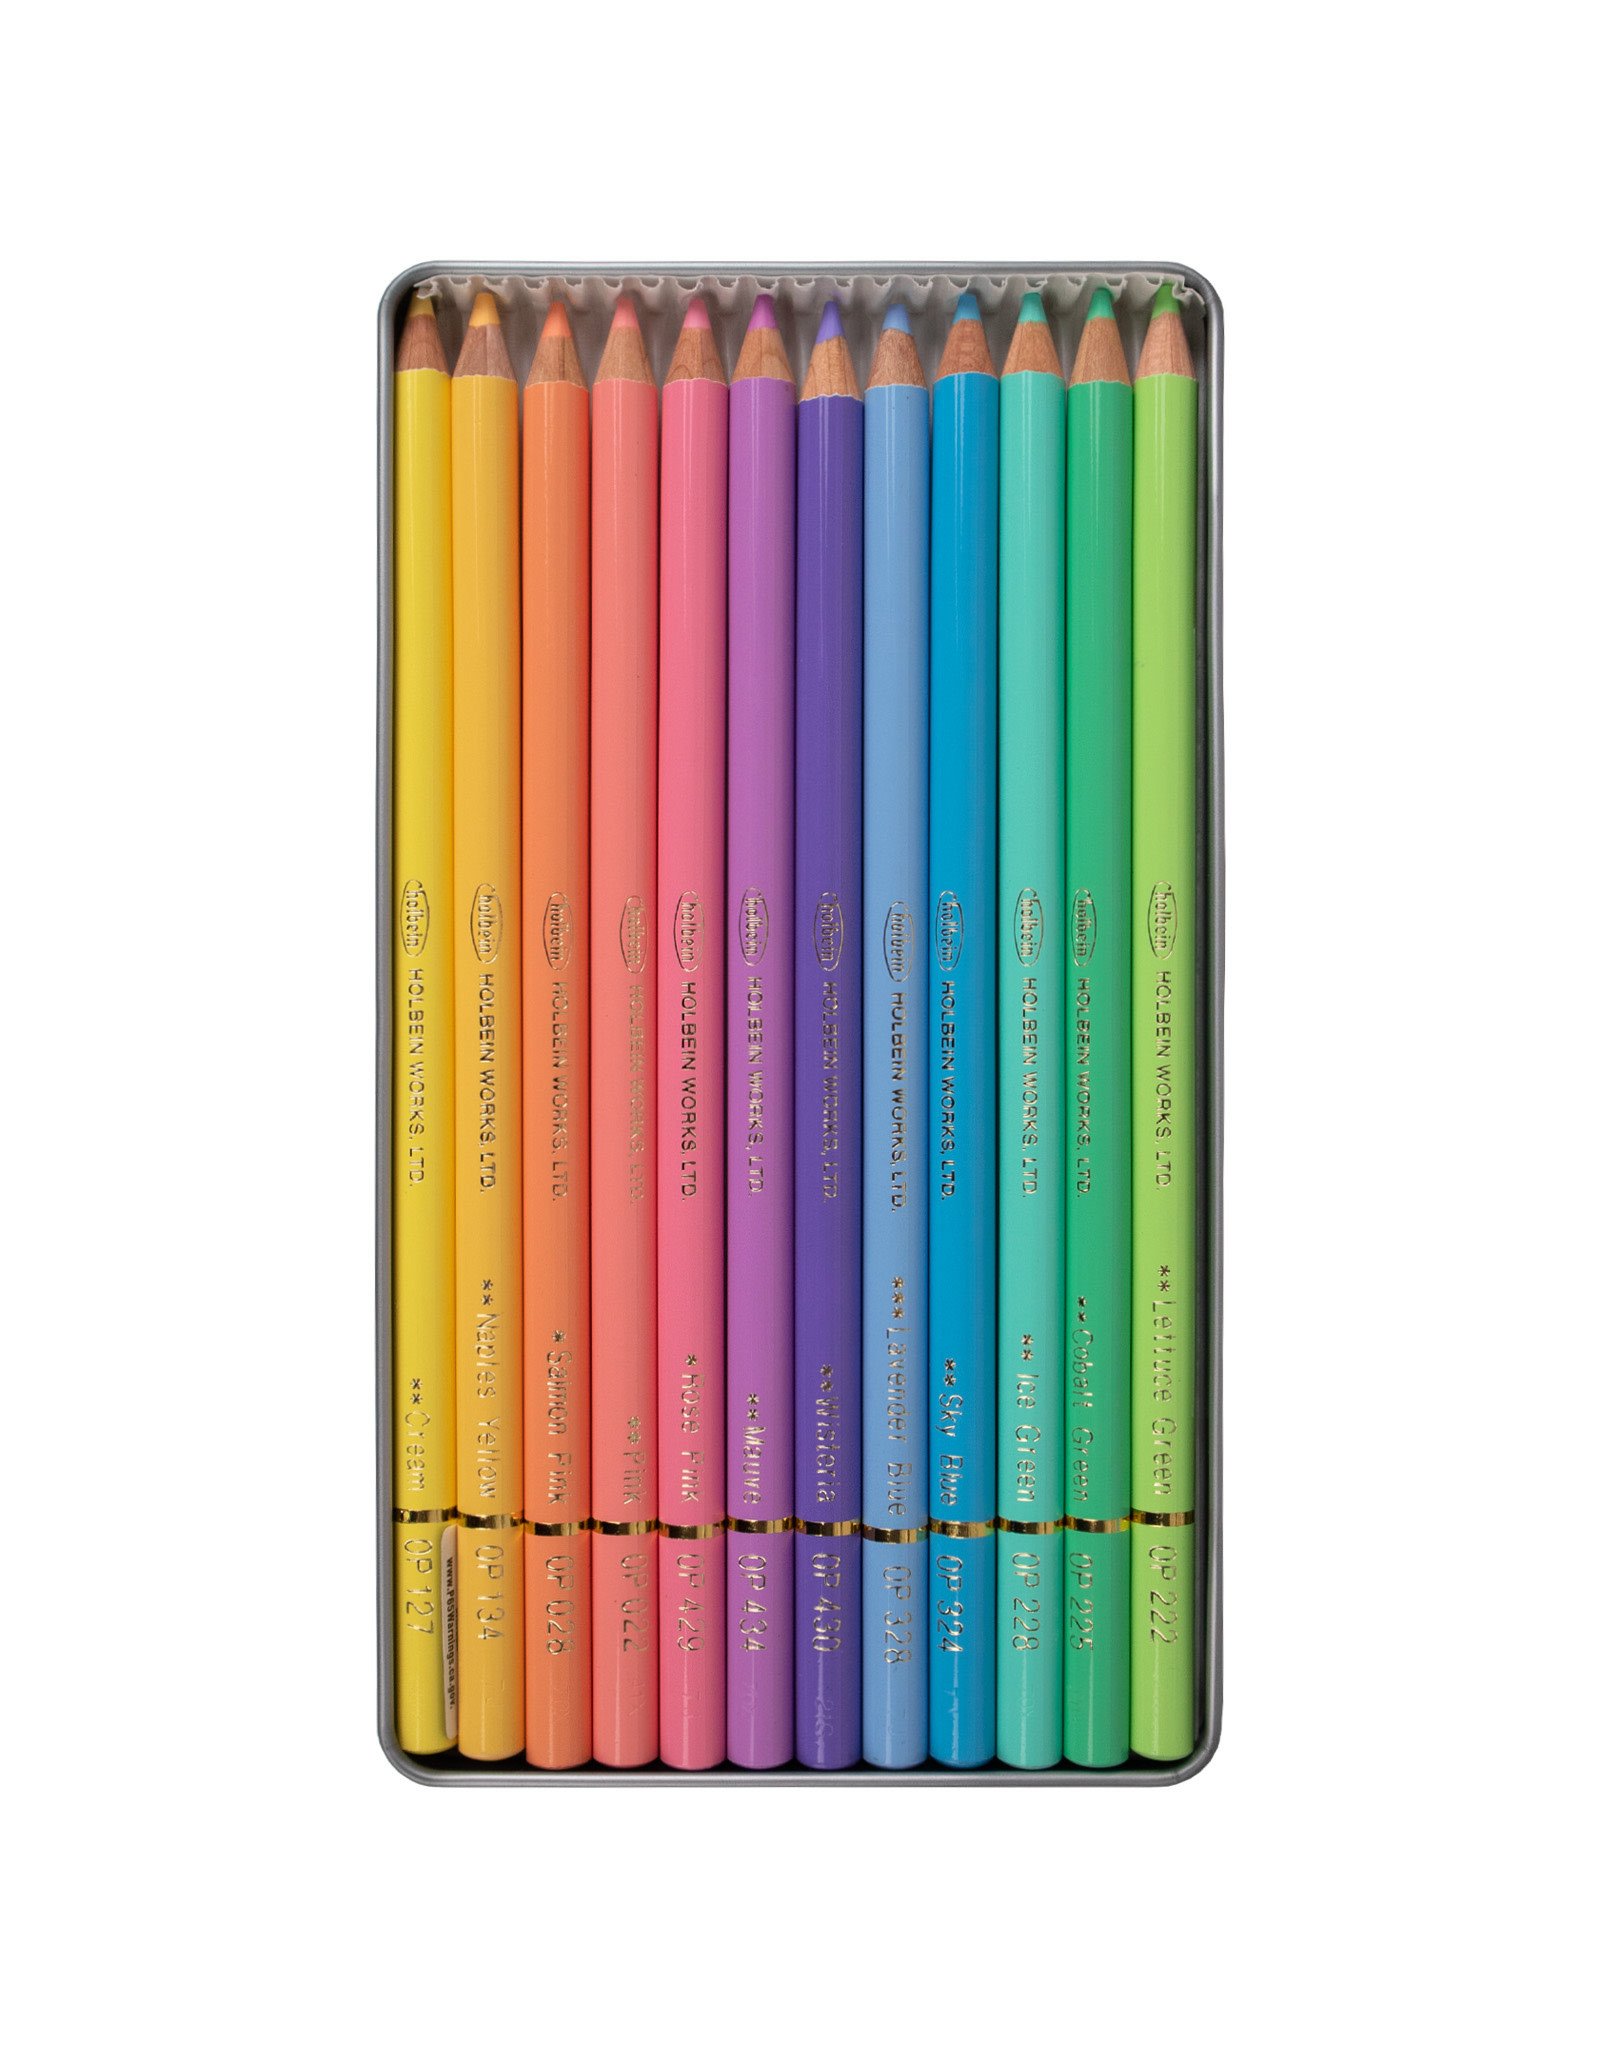 Faber-Castell Polychromos Artist Colored Pencil Set of 12 